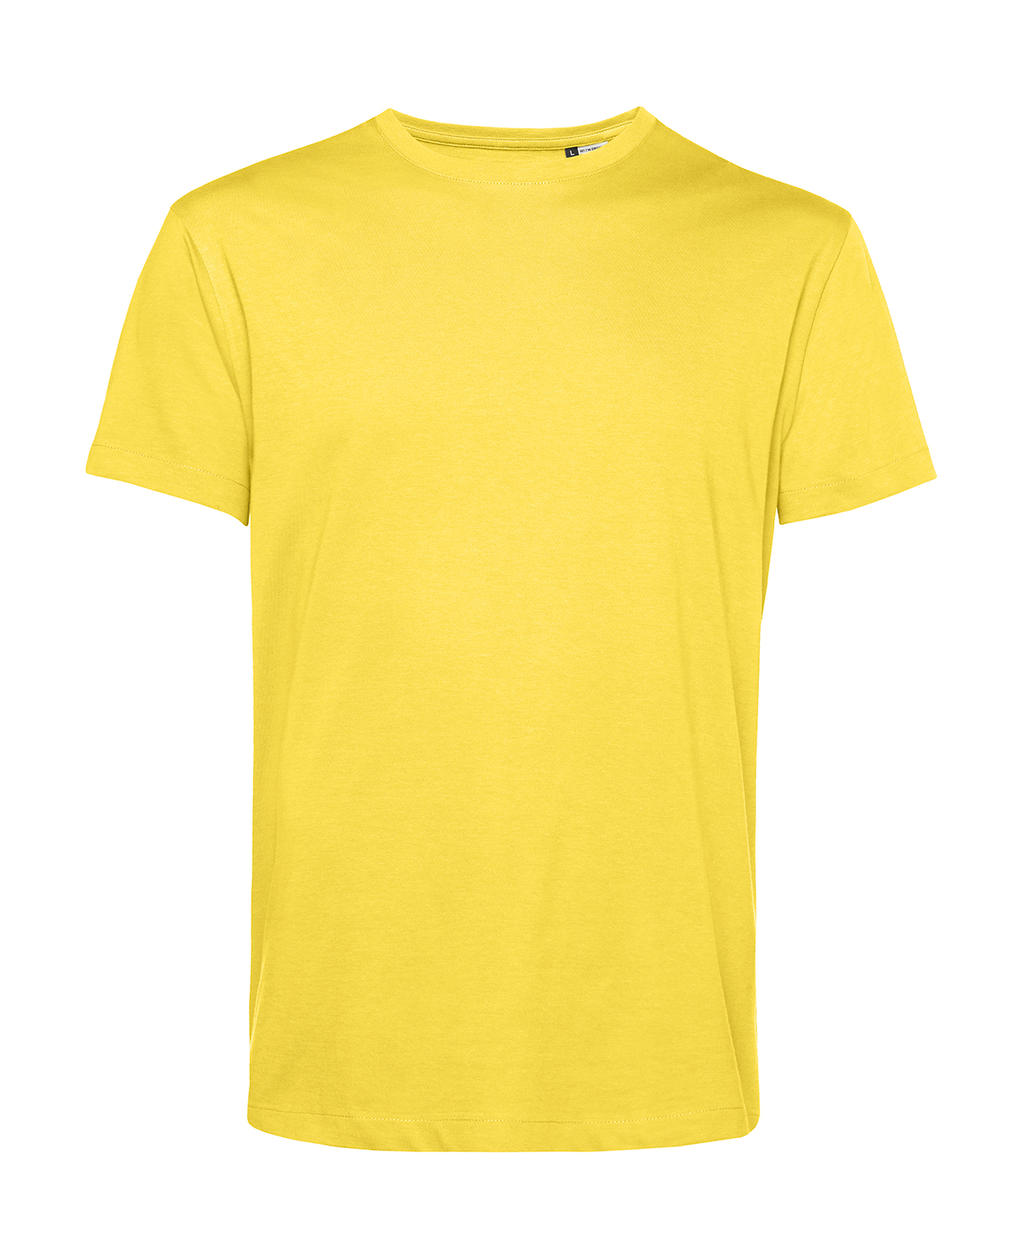 Tričko BC Organic Inspire E150 - žluté, XL